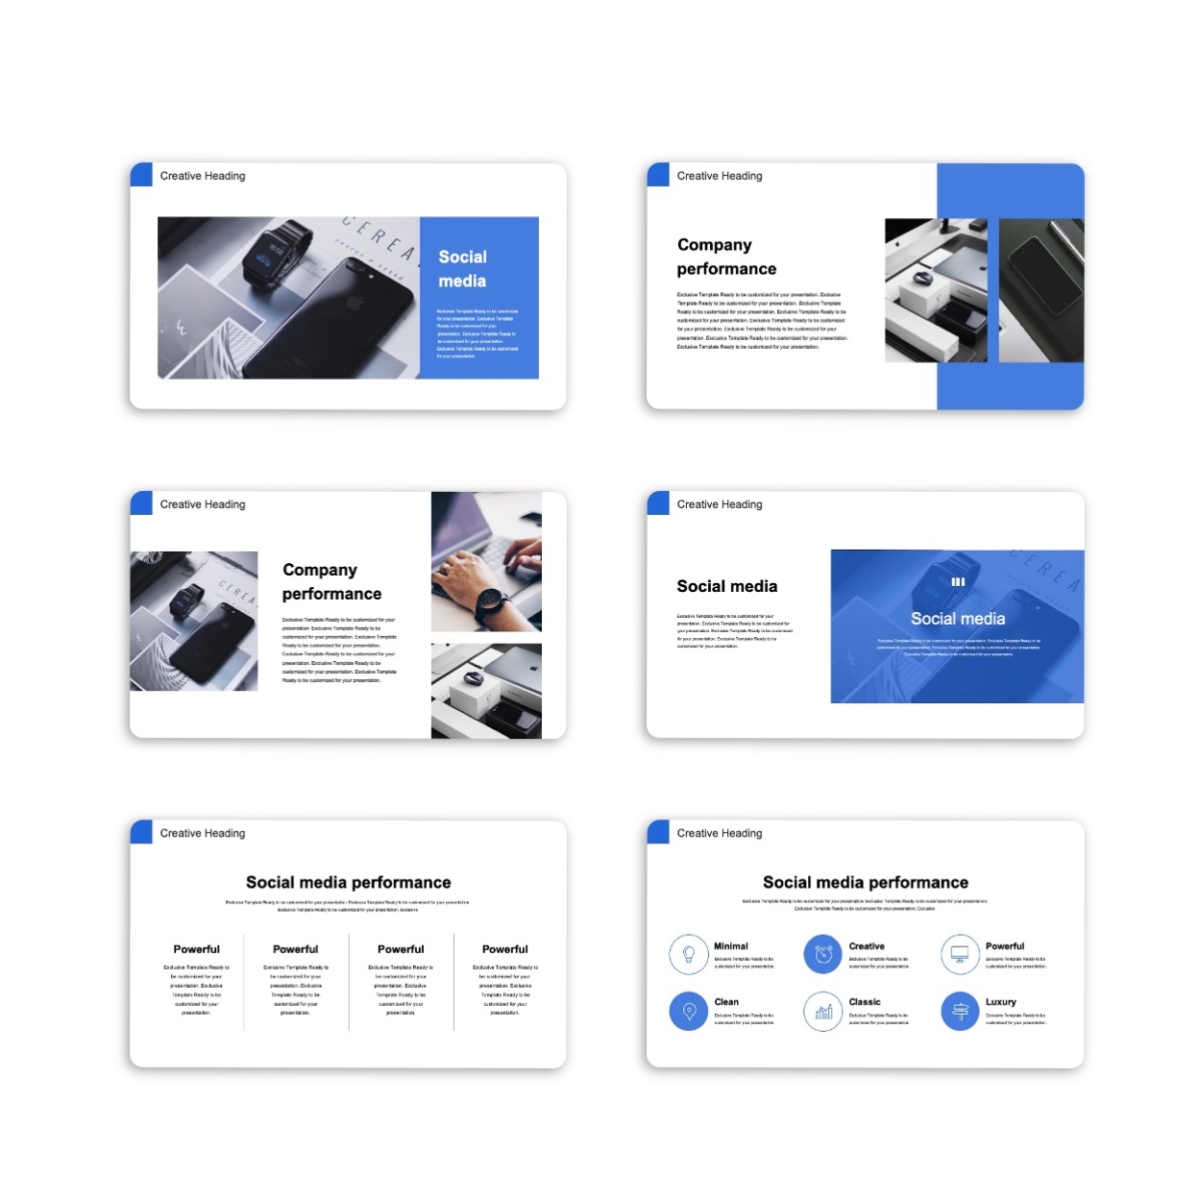 Google Slides-Blue Company Introduction Business Plan Presentation Template